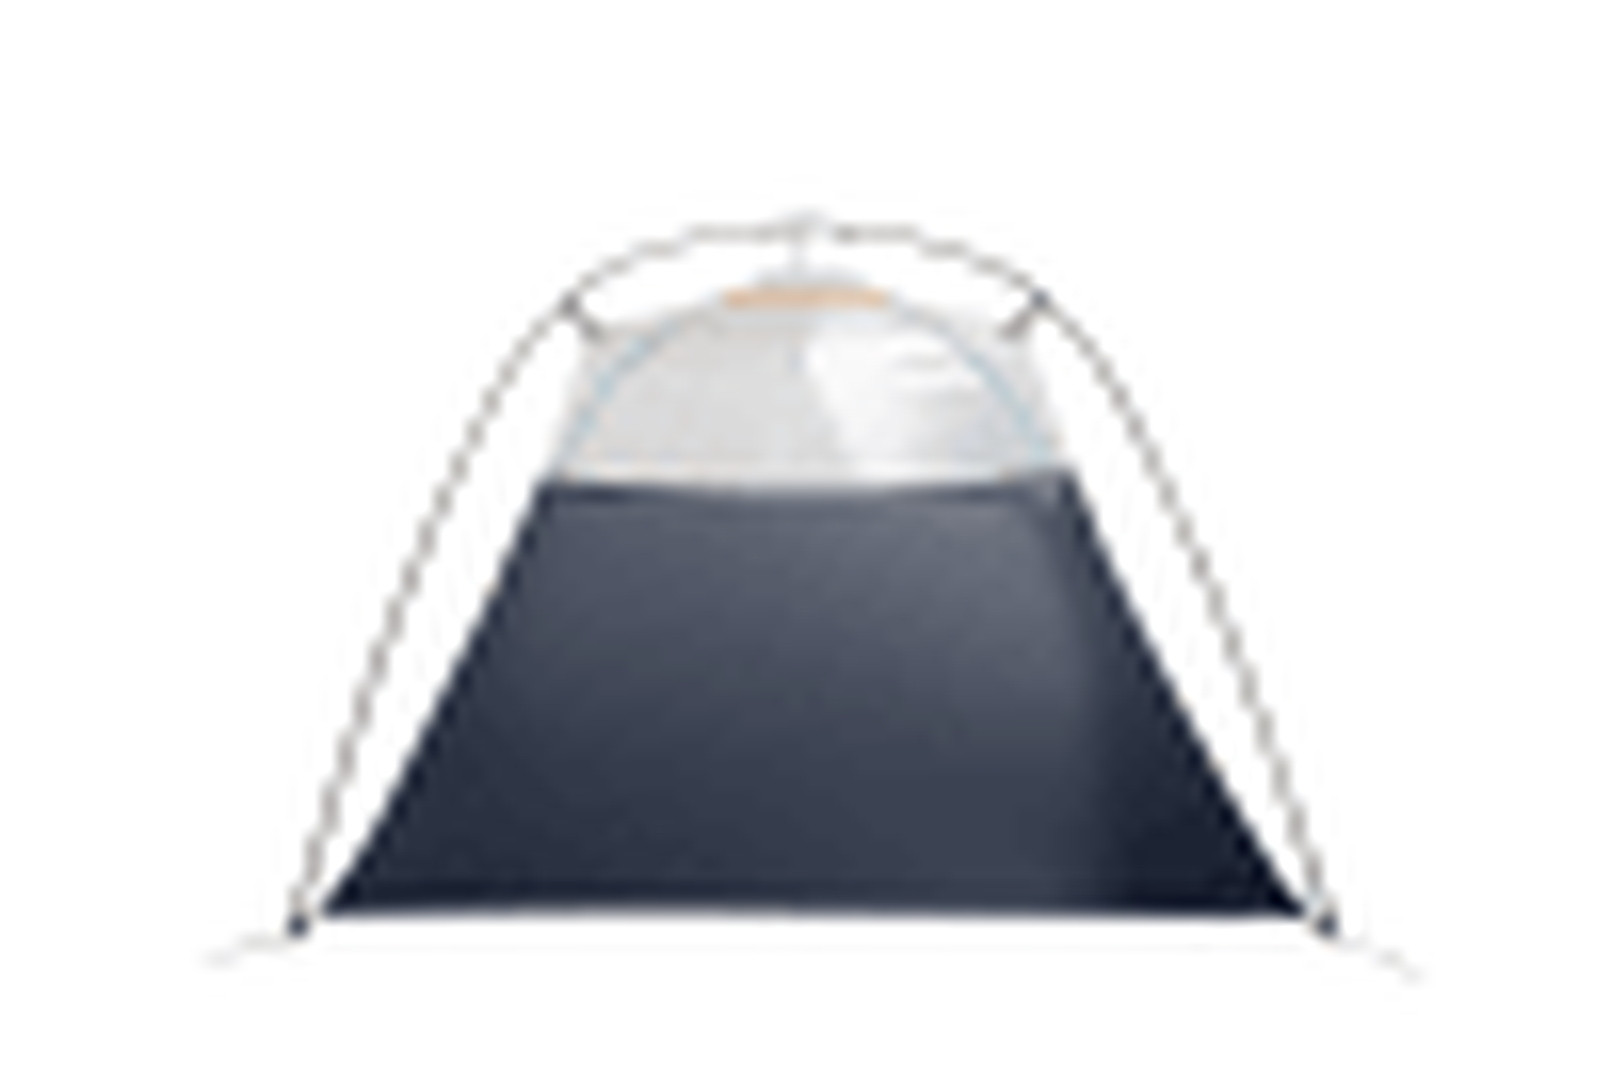 NEMO Hornet Elite OSMO 2P 2-Person Tents Ultralight Tents | lupon.gov.ph